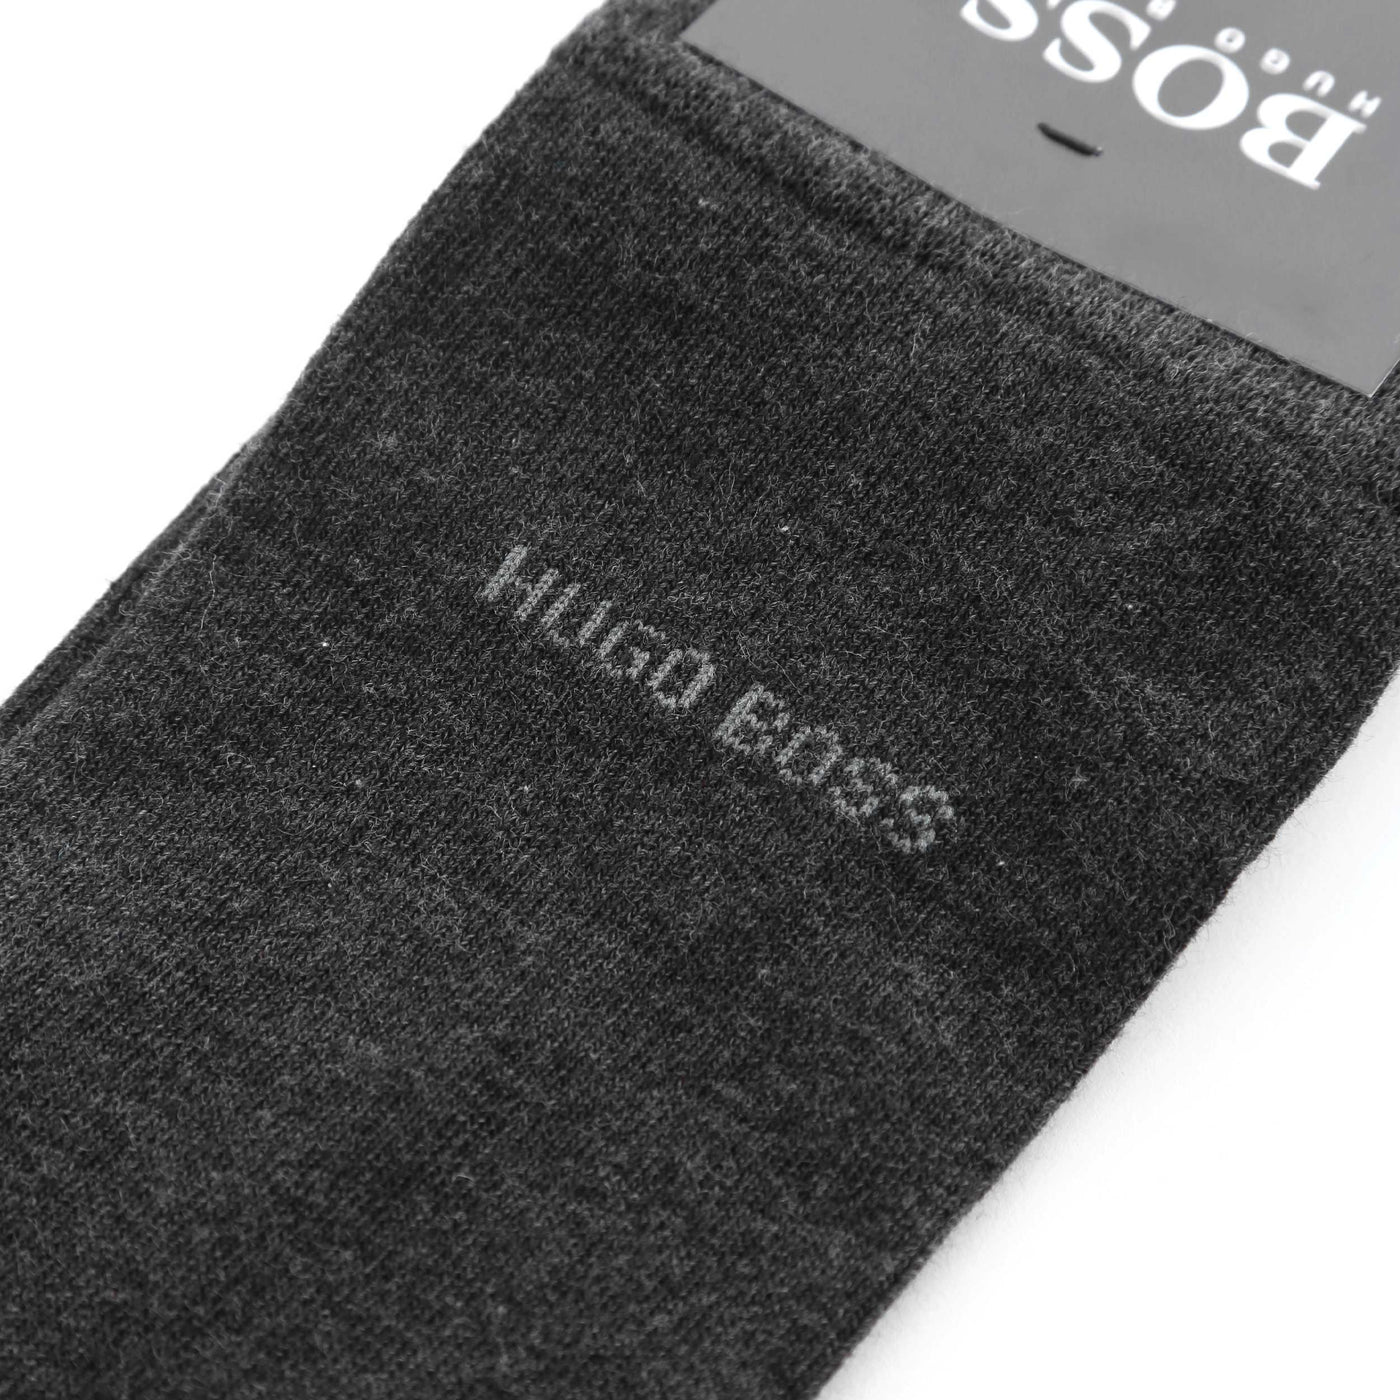 BOSS 2 Pack RS Gadget Gift Set in Black & Grey